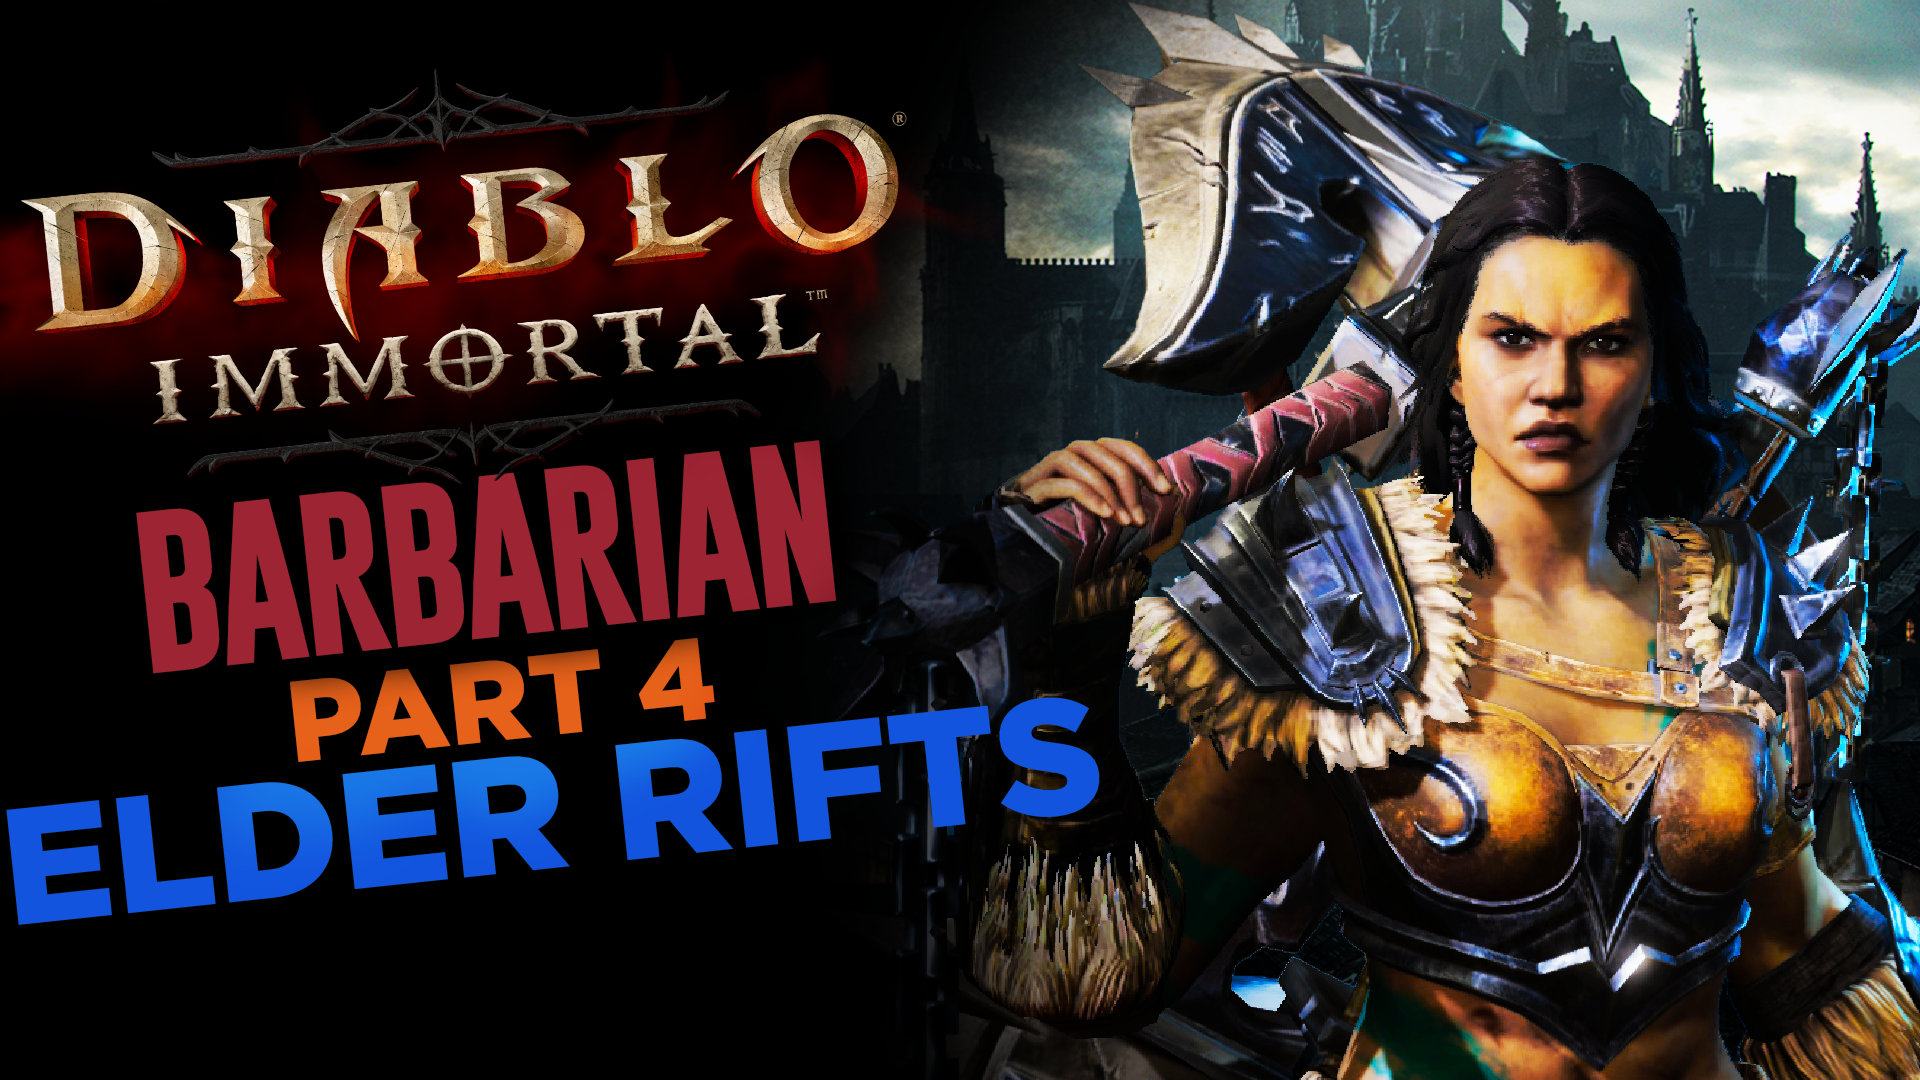 Barbarian Quests Part 4